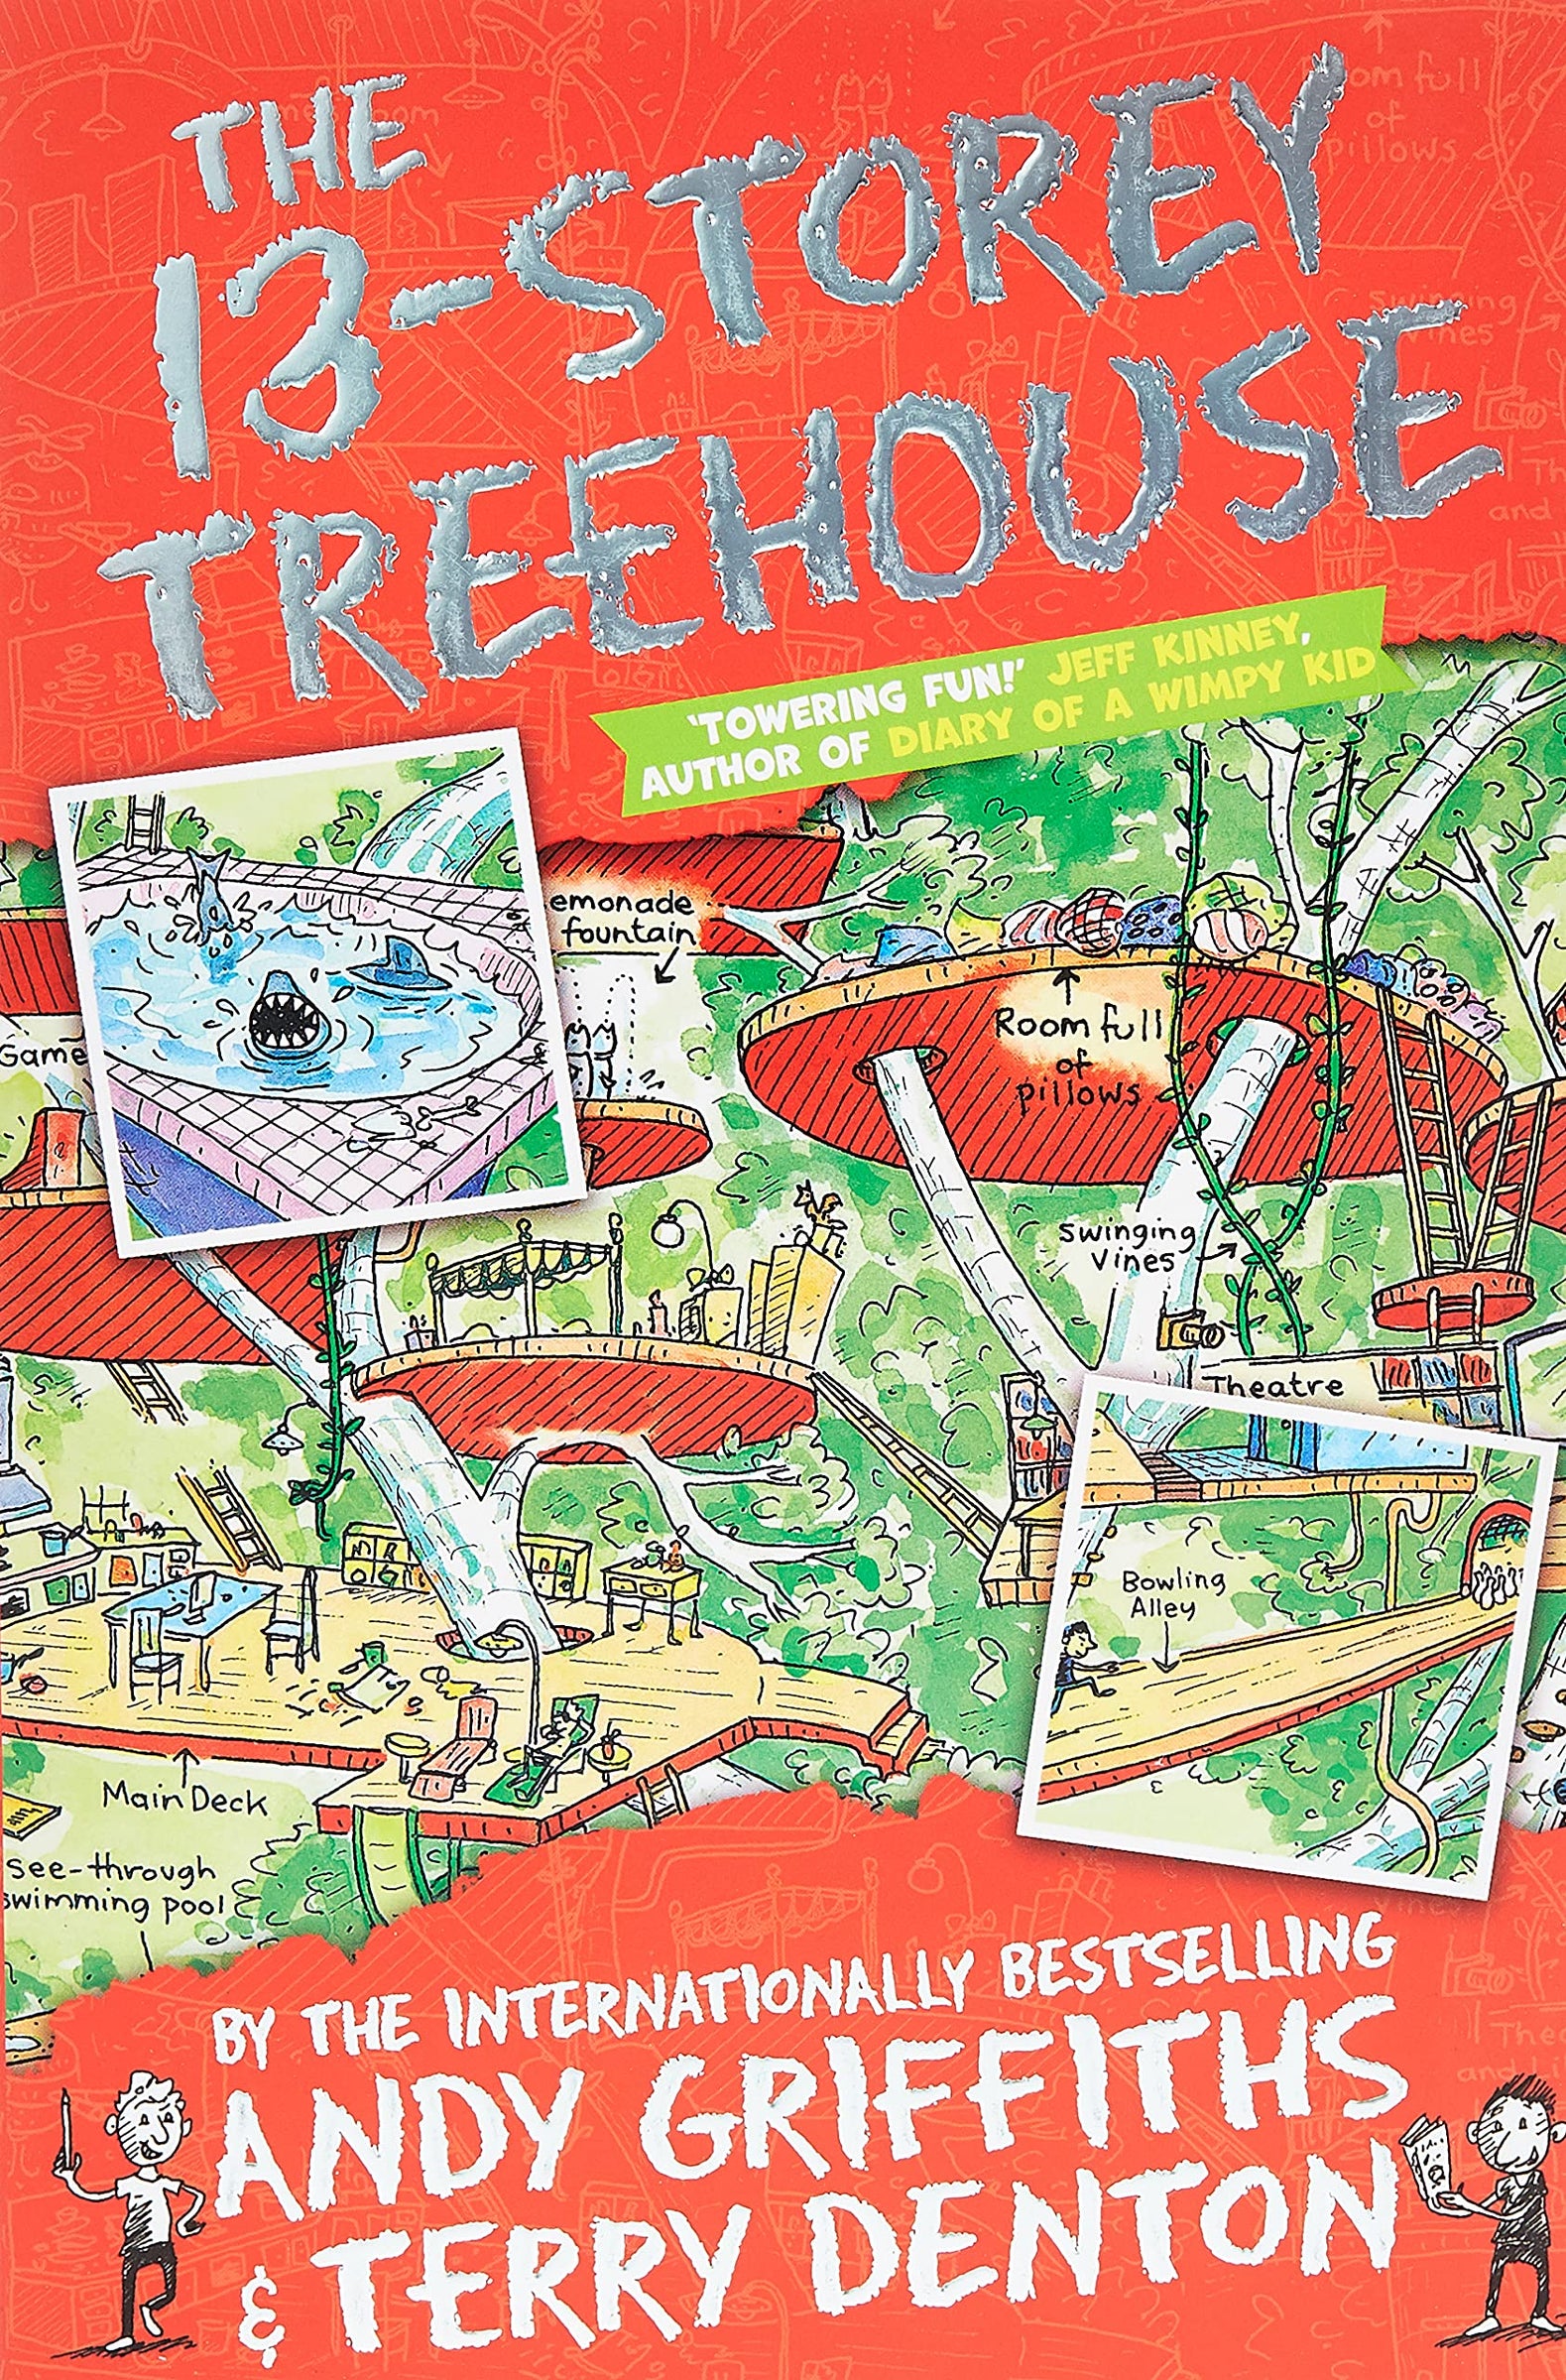 The 13-Storey Treehouse